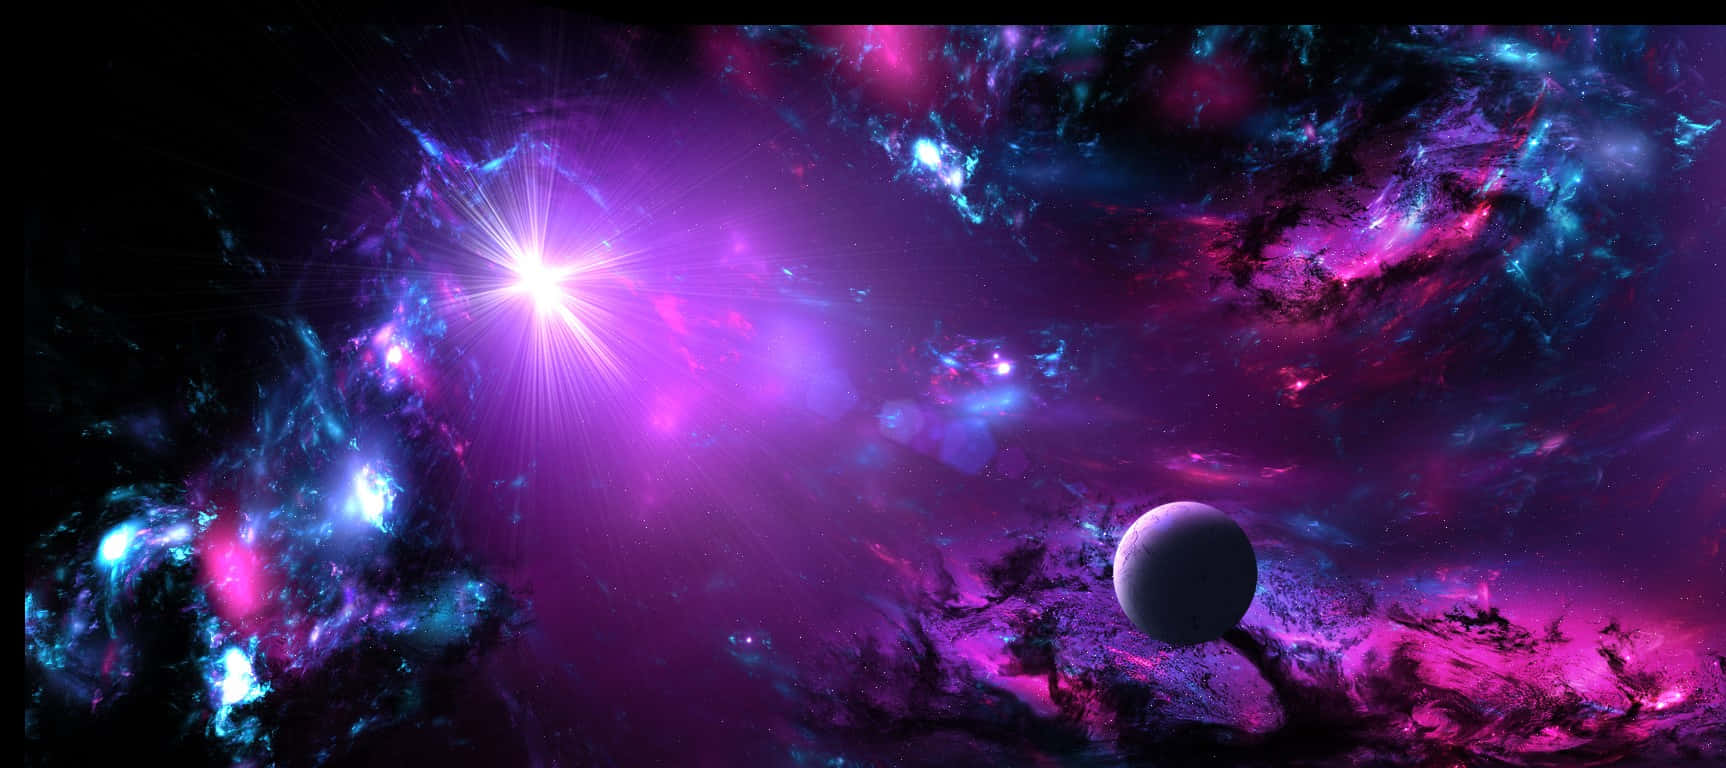 Colorful Space Fantasy Wallpaper